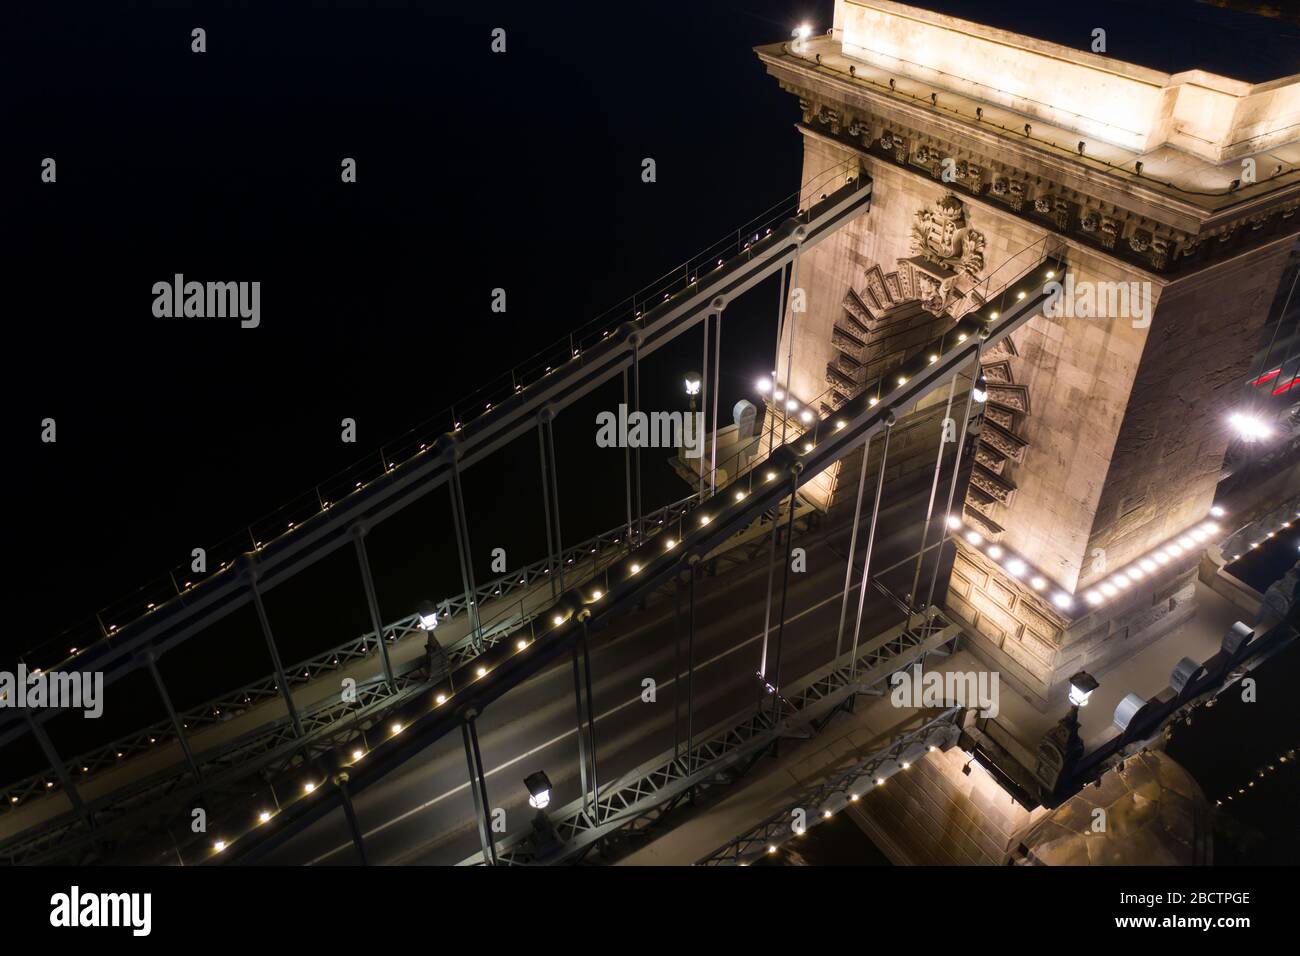 Hungarian Crest on illuminated Chain Bridge, Budapest, Hungary. Close up aerial stock photo. Stock Photo